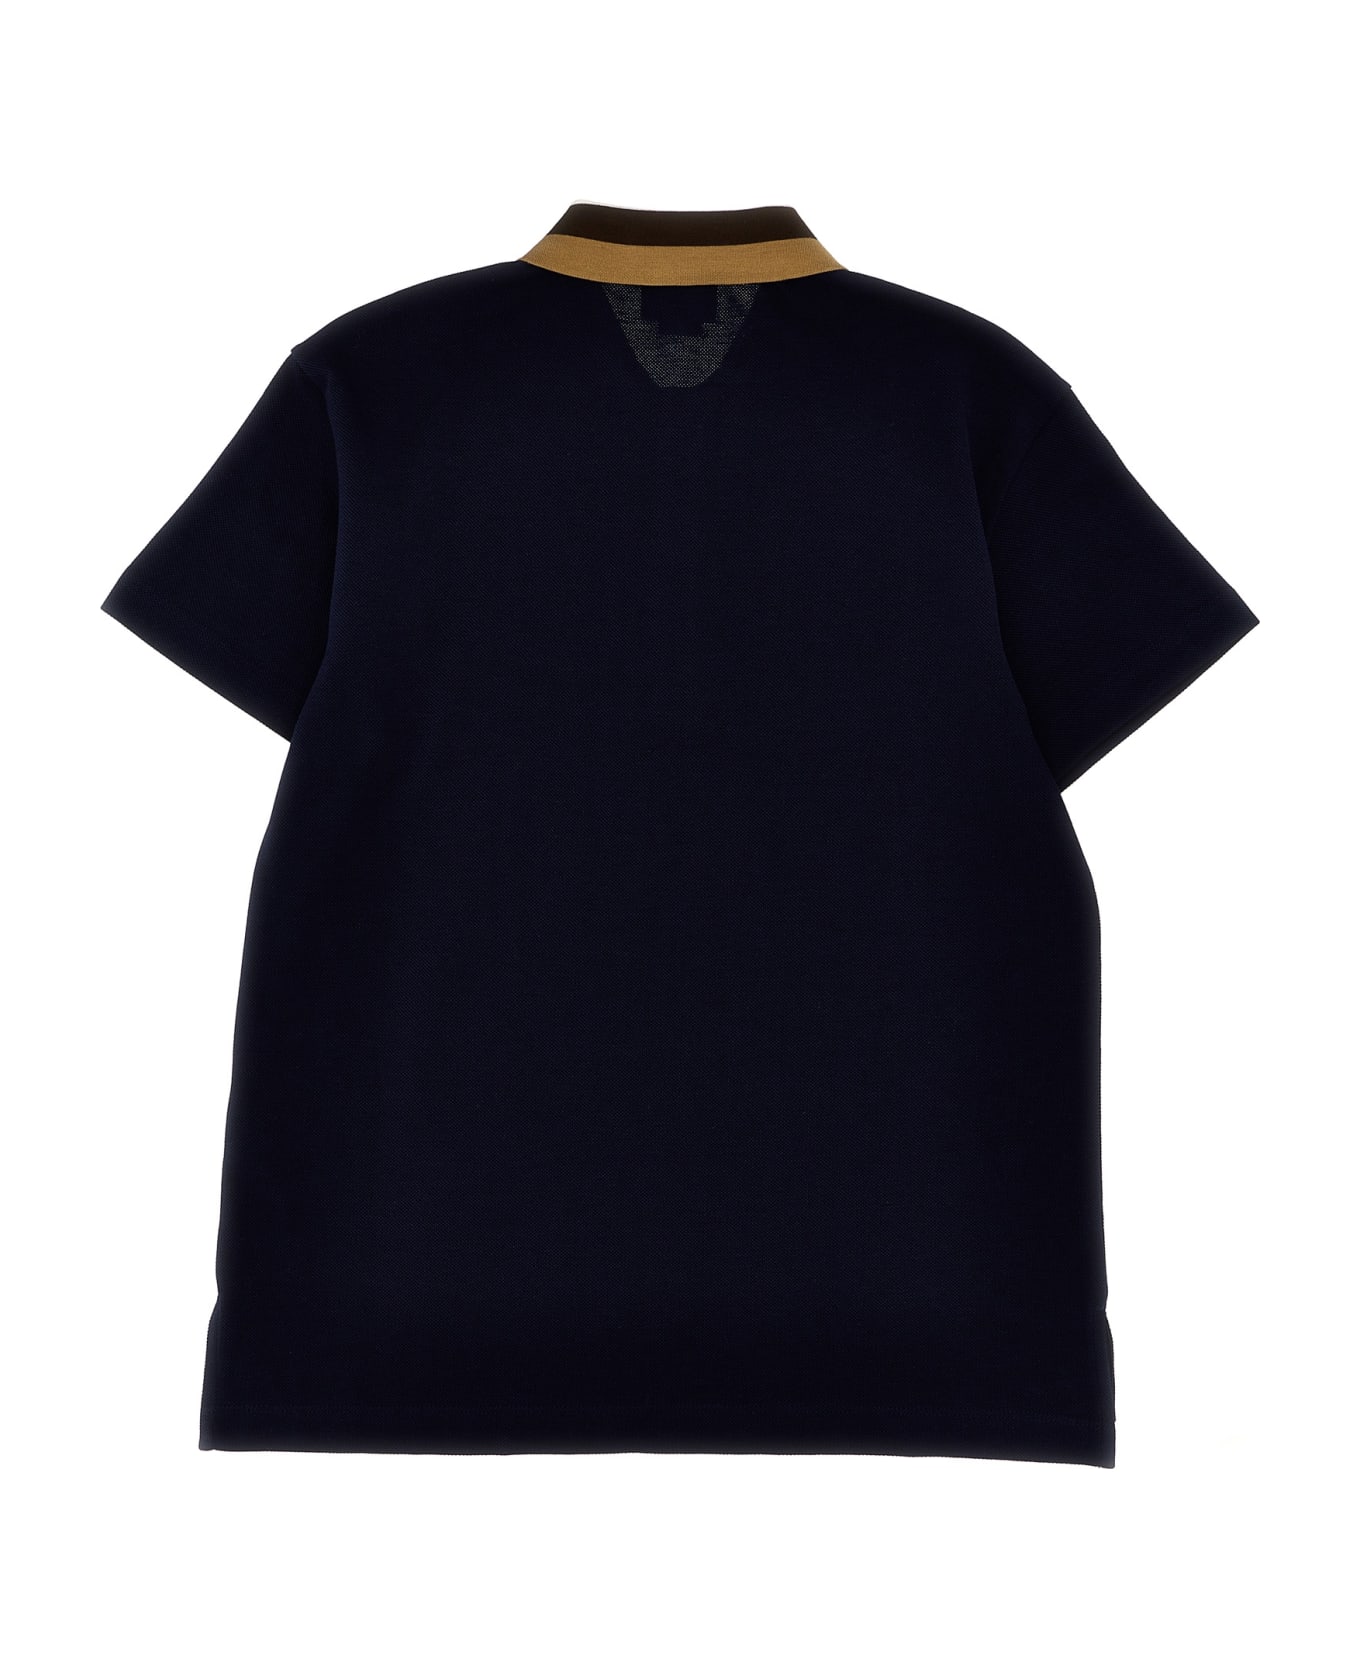 Fendi Logo Collar Polo Shirt - Blu